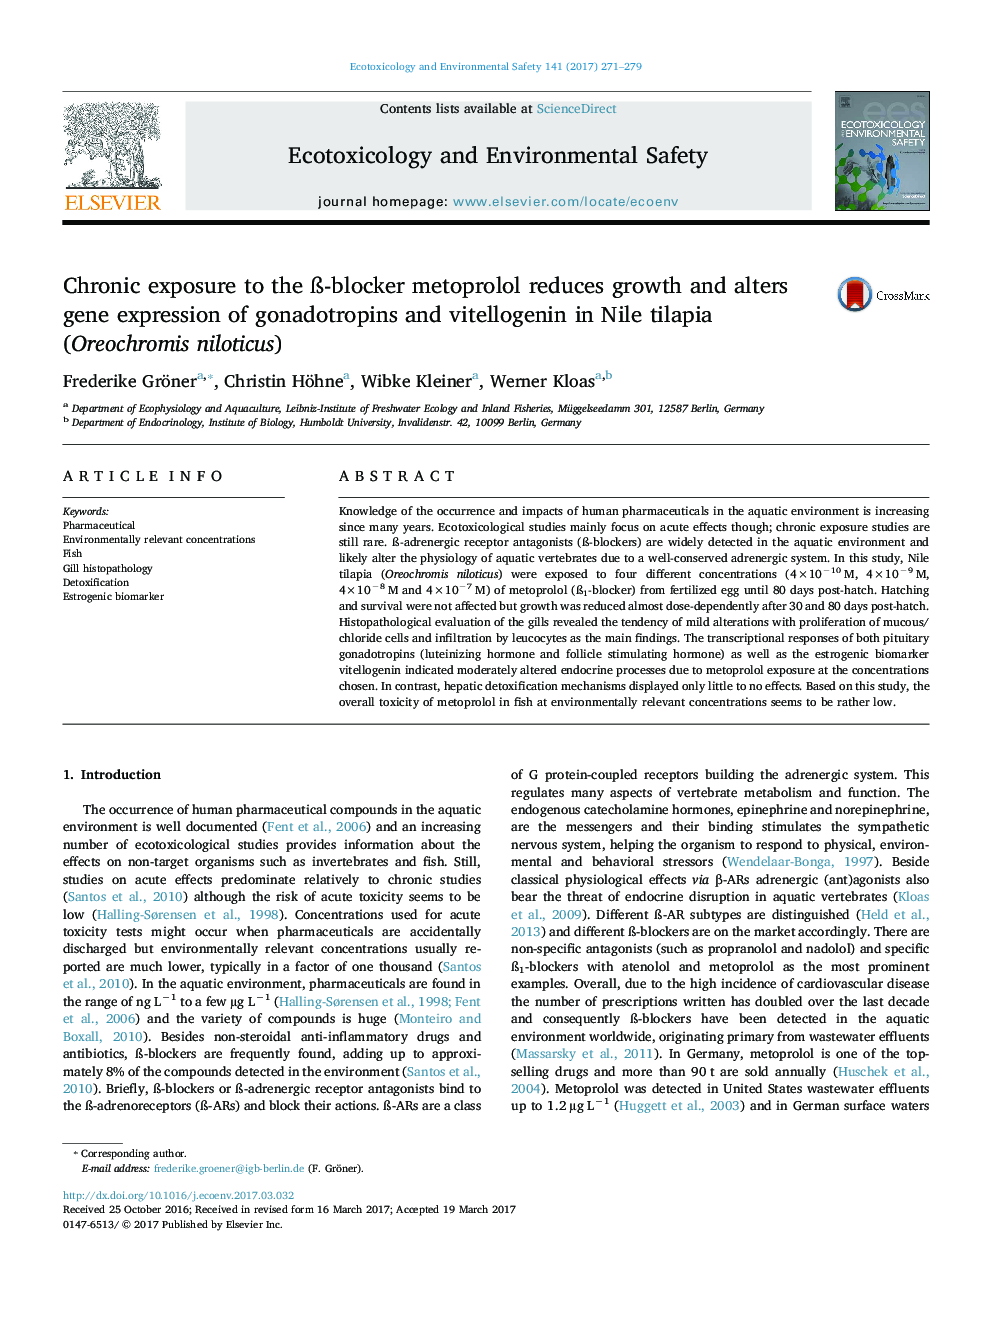 Chronic exposure to the Ã-blocker metoprolol reduces growth and alters gene expression of gonadotropins and vitellogenin in Nile tilapia (Oreochromis niloticus)